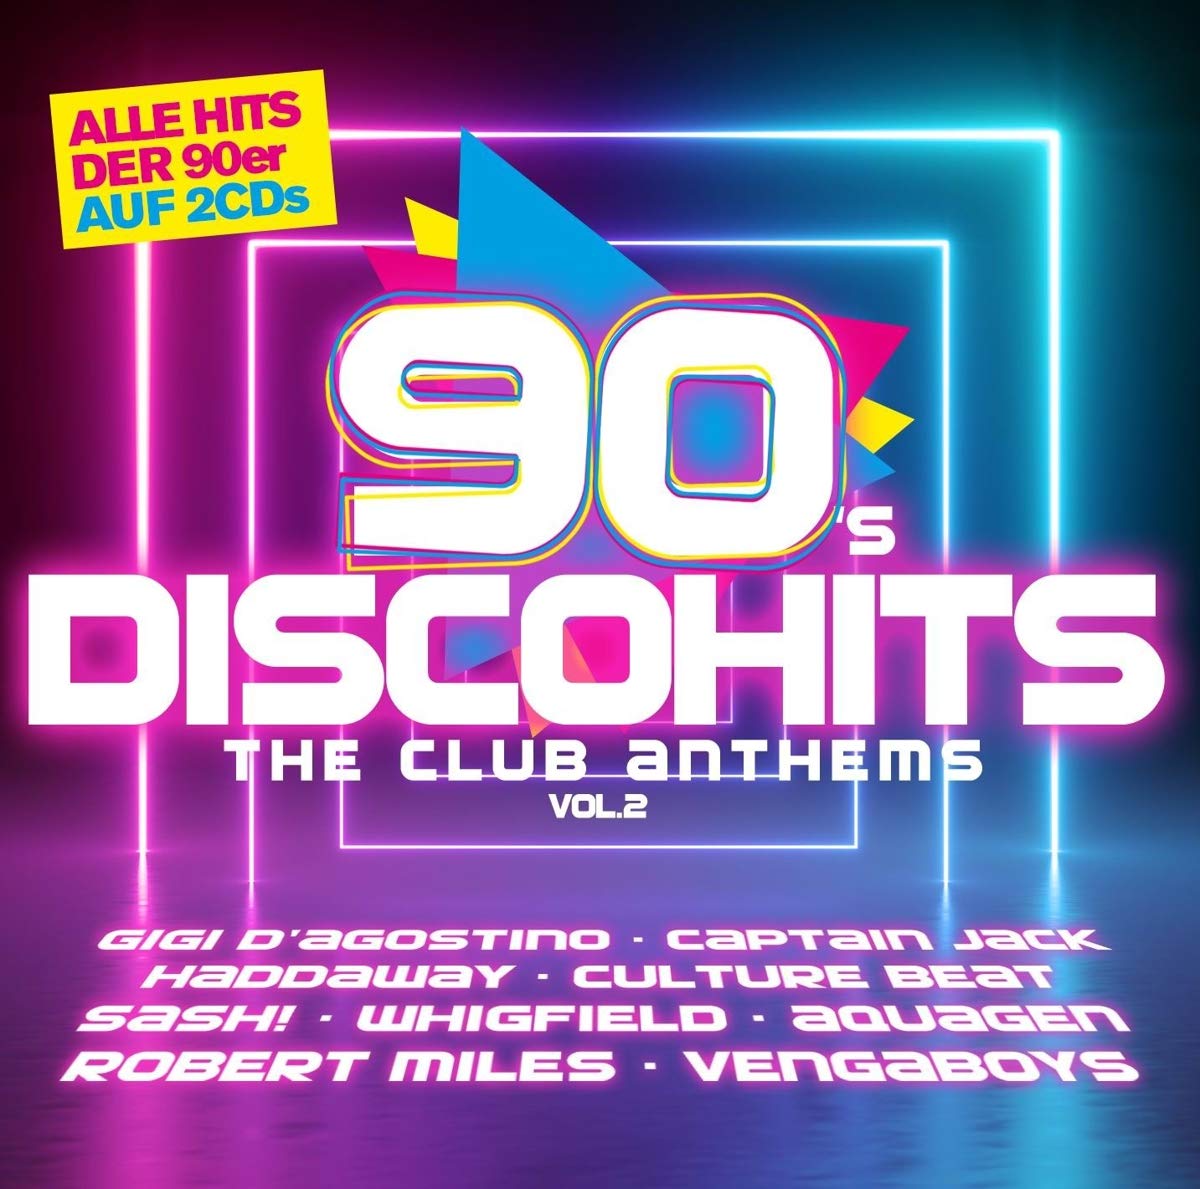 New disco hits. Диско 90. Disco Hits. Disco 90's. 90s Disco Hits - the Club Anthems Vol. 2 (2019).